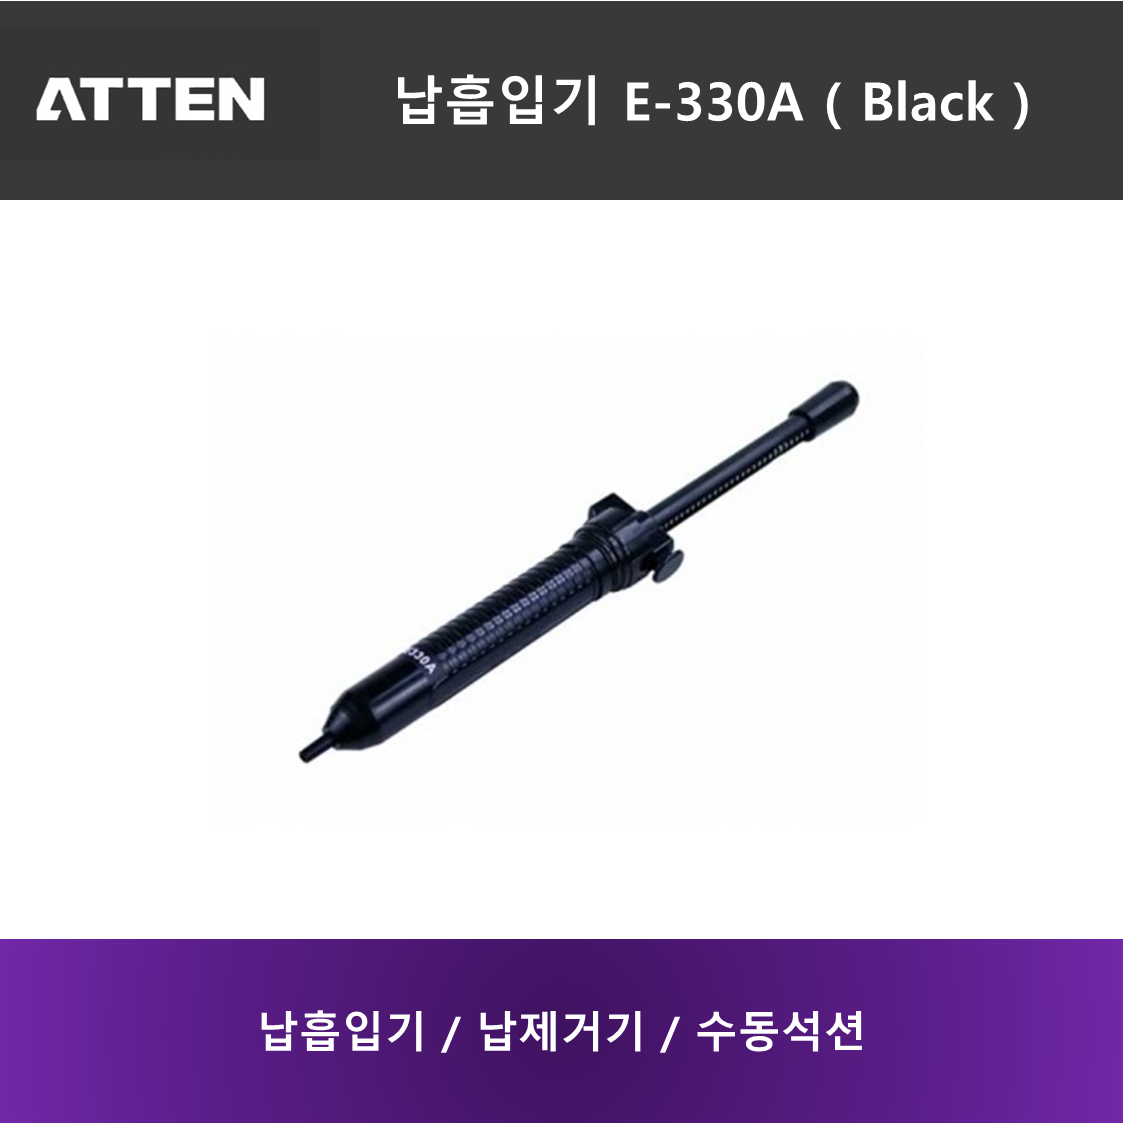 ATTEN 납흡입기 AT E-330A (Black) 판매하지 않는 상품입니다. 구매해도 배송하지 않습니다.